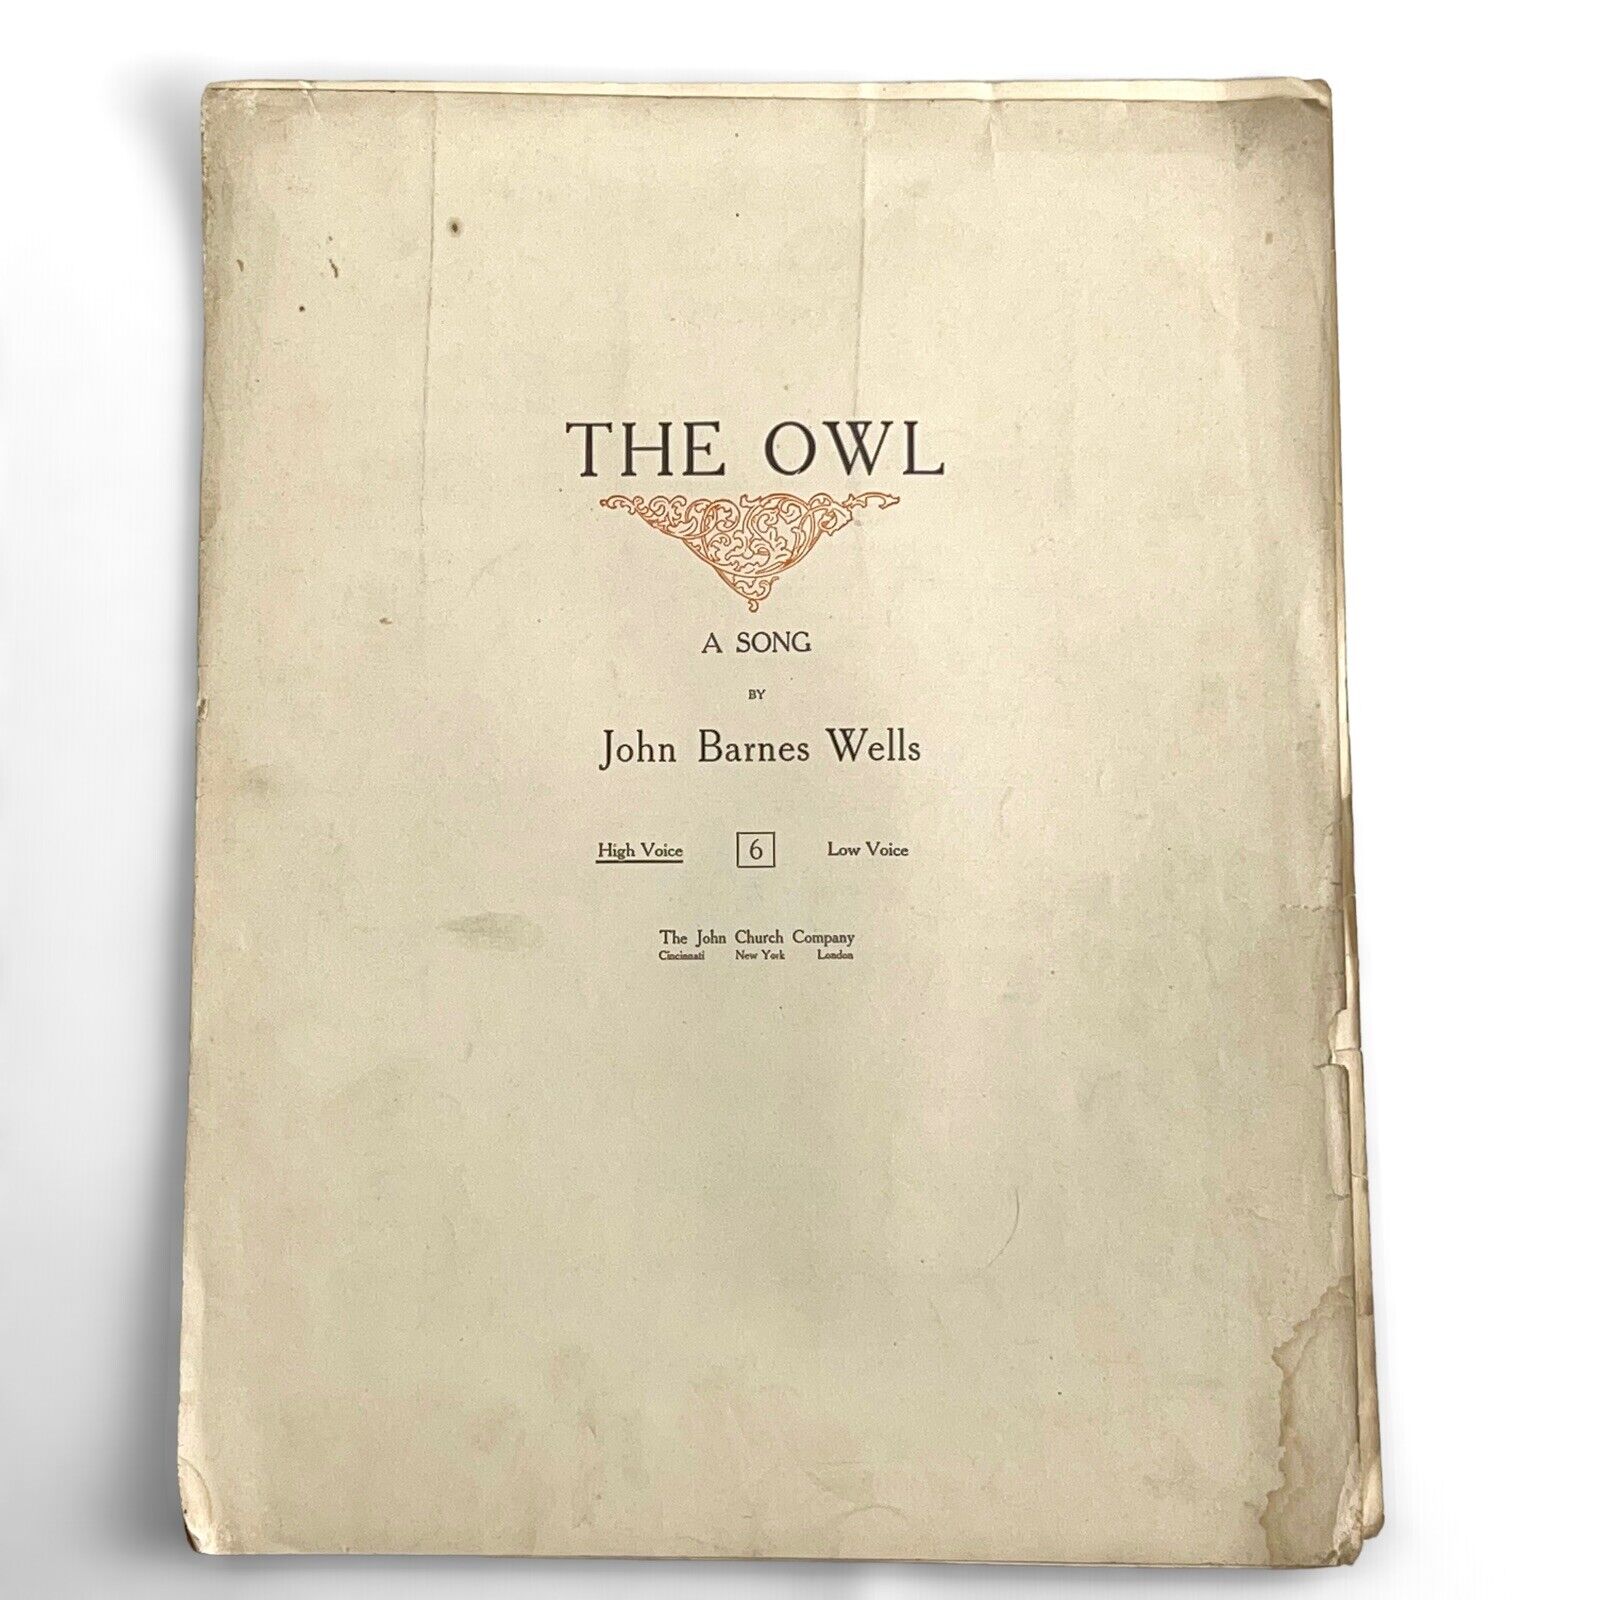 1913 - The owl John Barnes Wells - Sheet Music